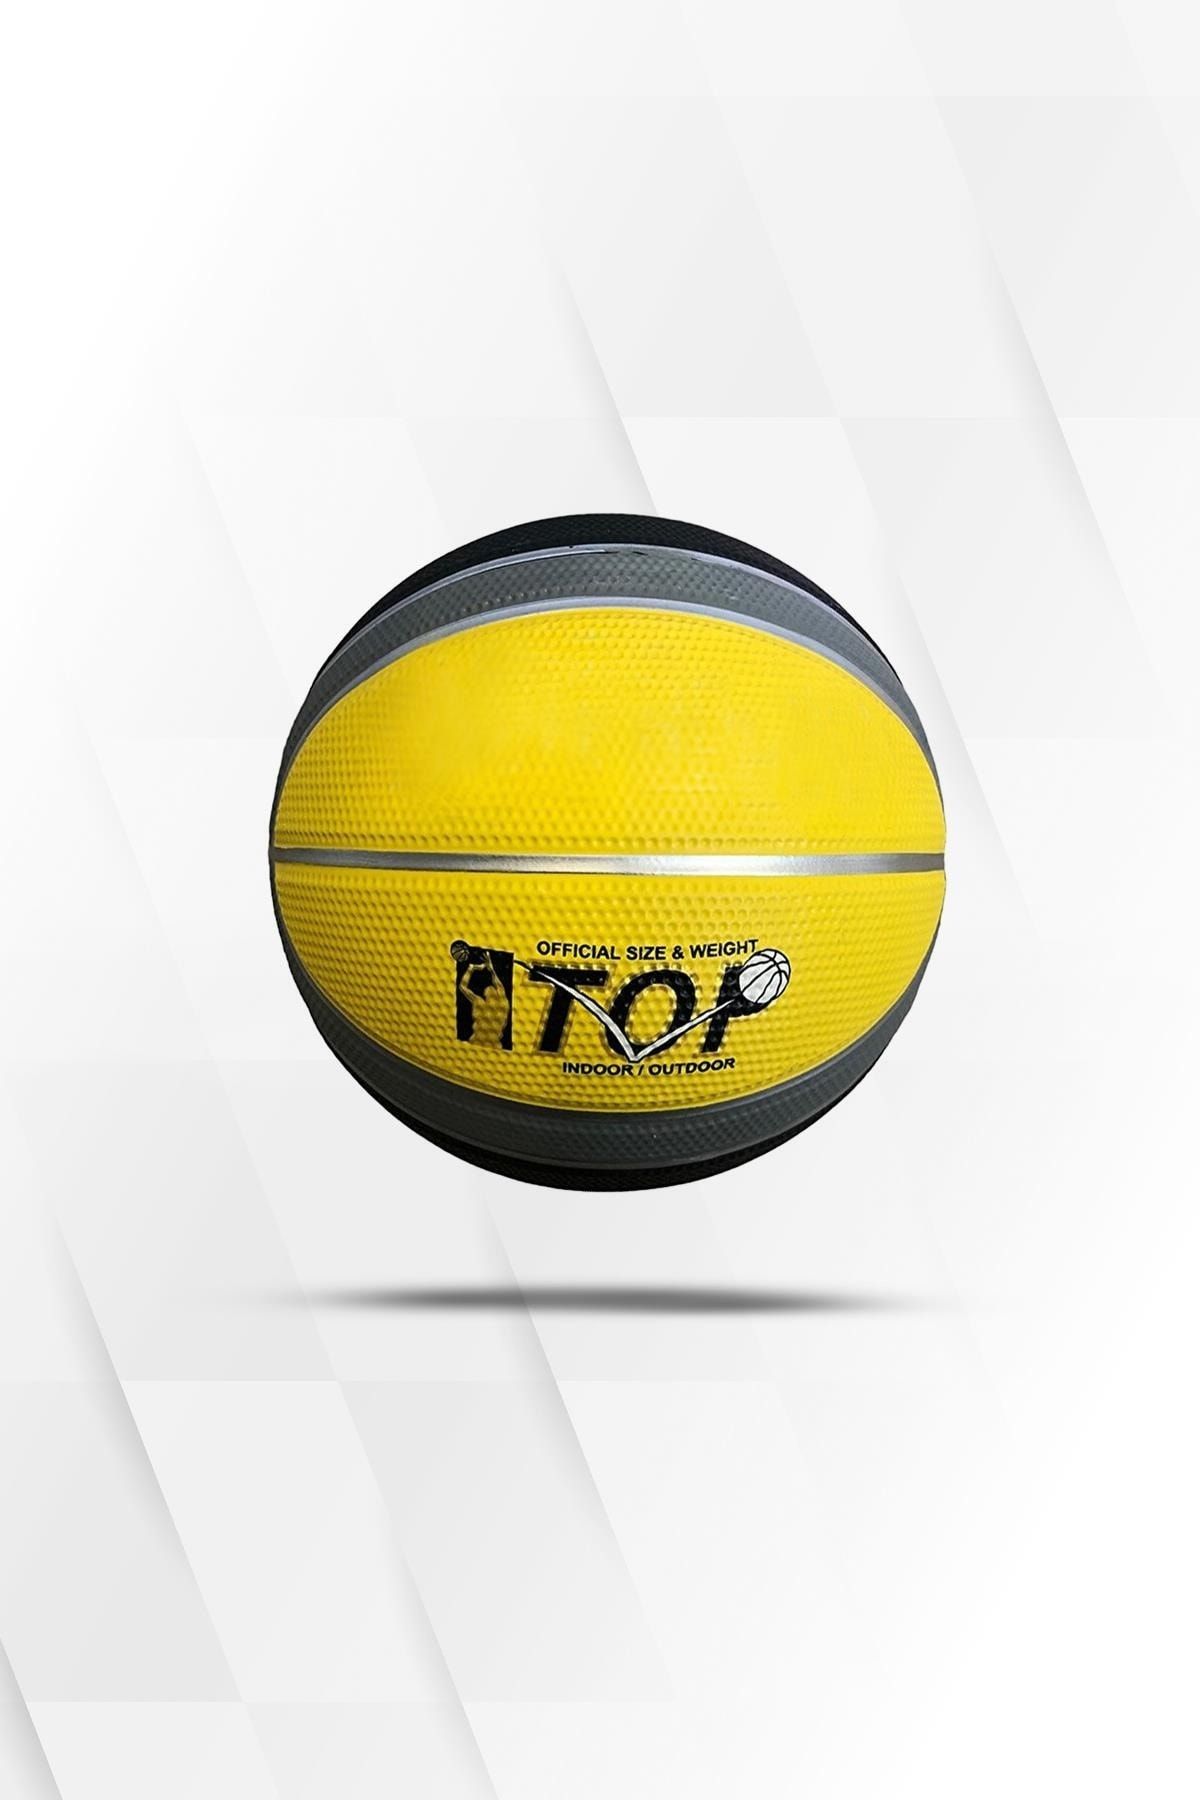 Hsport Üst Kalite Pro Basketbol Topu Iç-dış Saha 7 Numara Kaymaz Kauçuk Basket Topu + Hediyeli